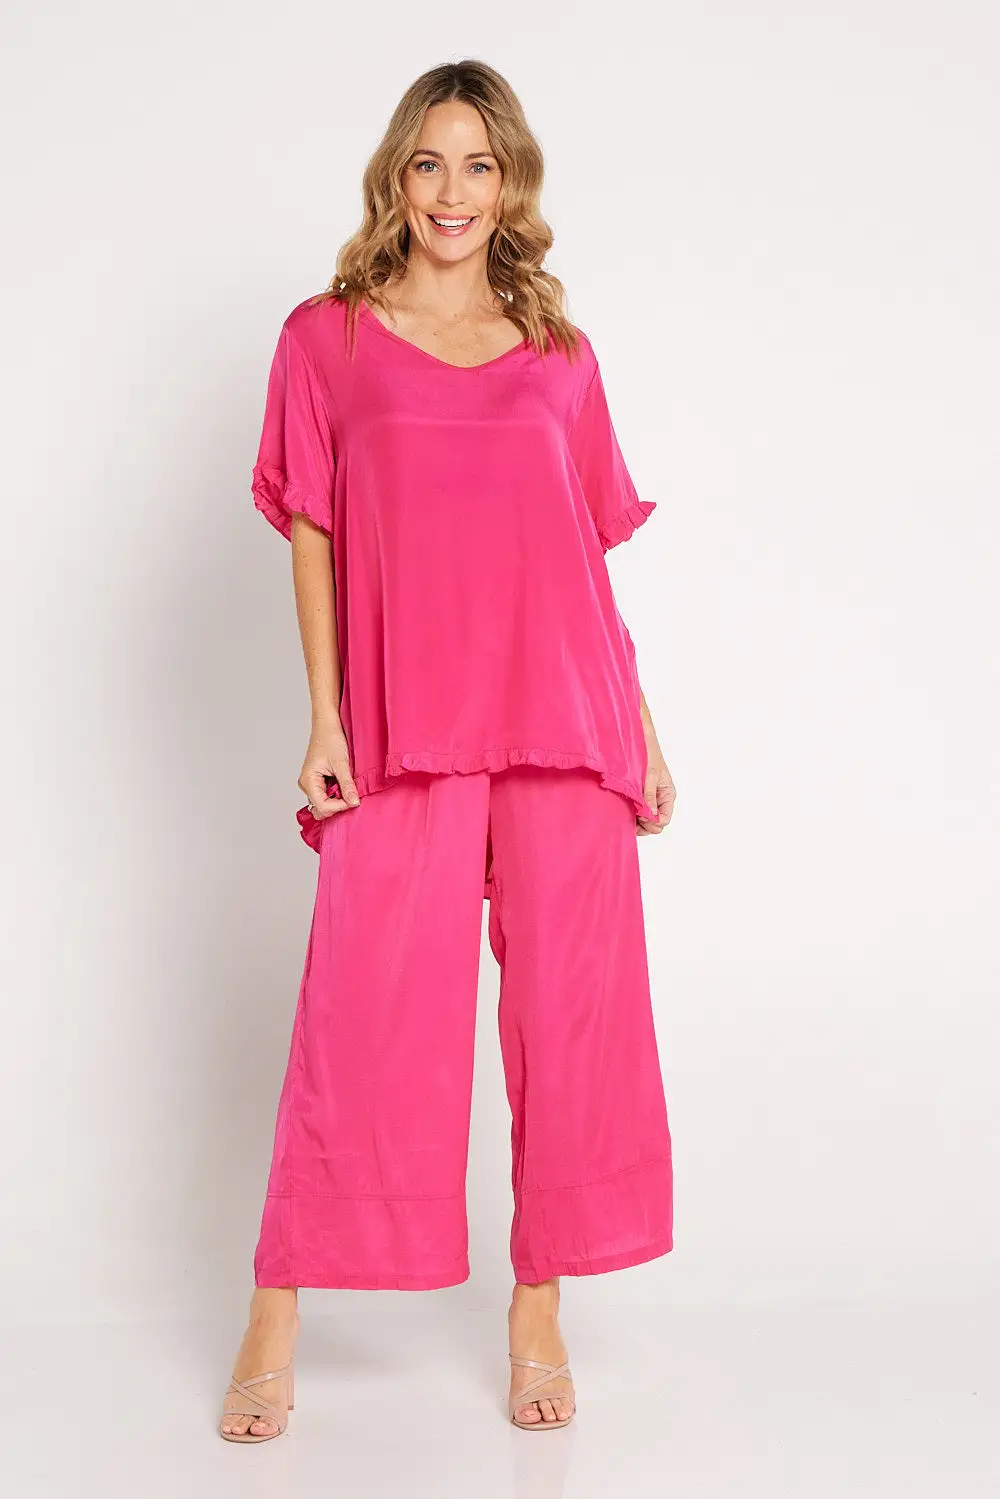 Robyn Pants - Hot Pink